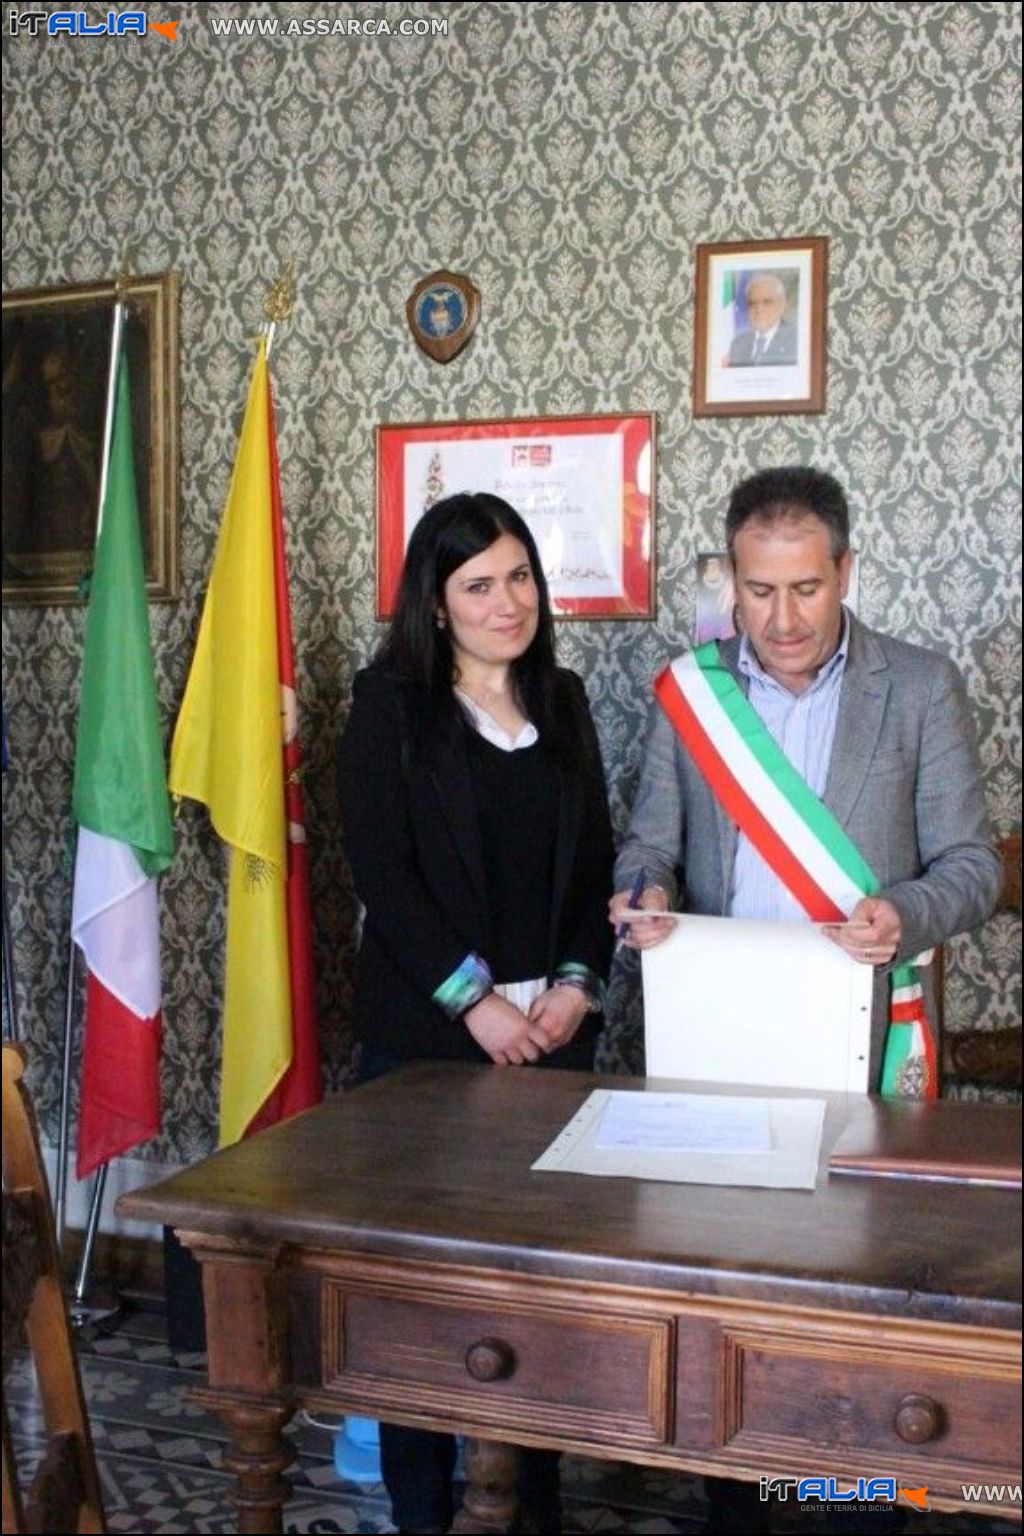 Il sindaco consegna cittadinanza italiana